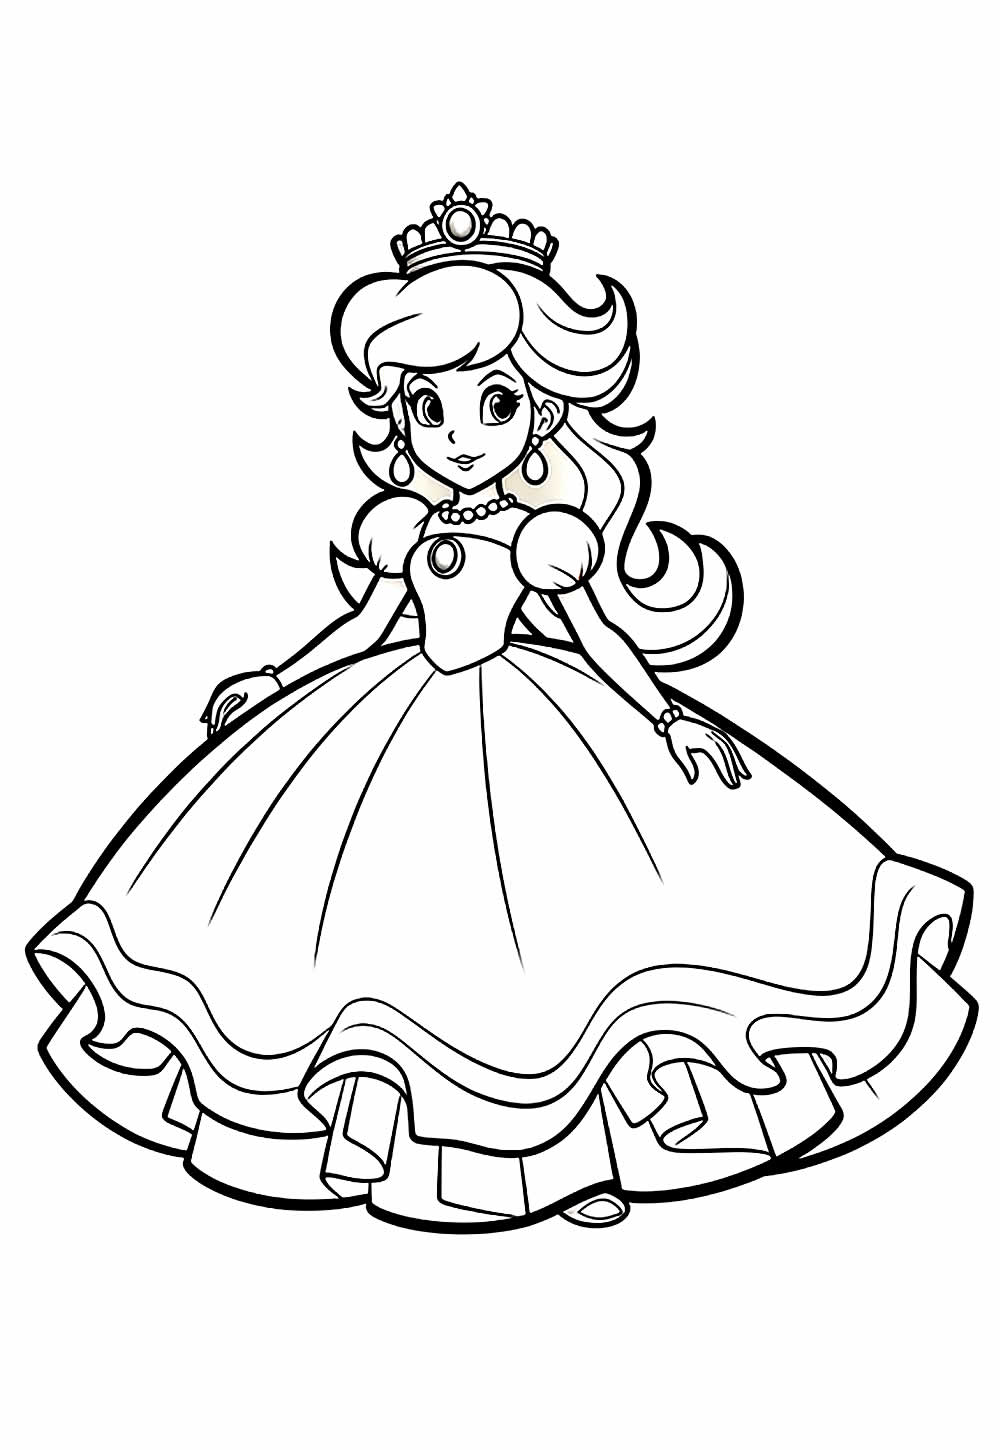 Princesa Peach para colorir e imprimir